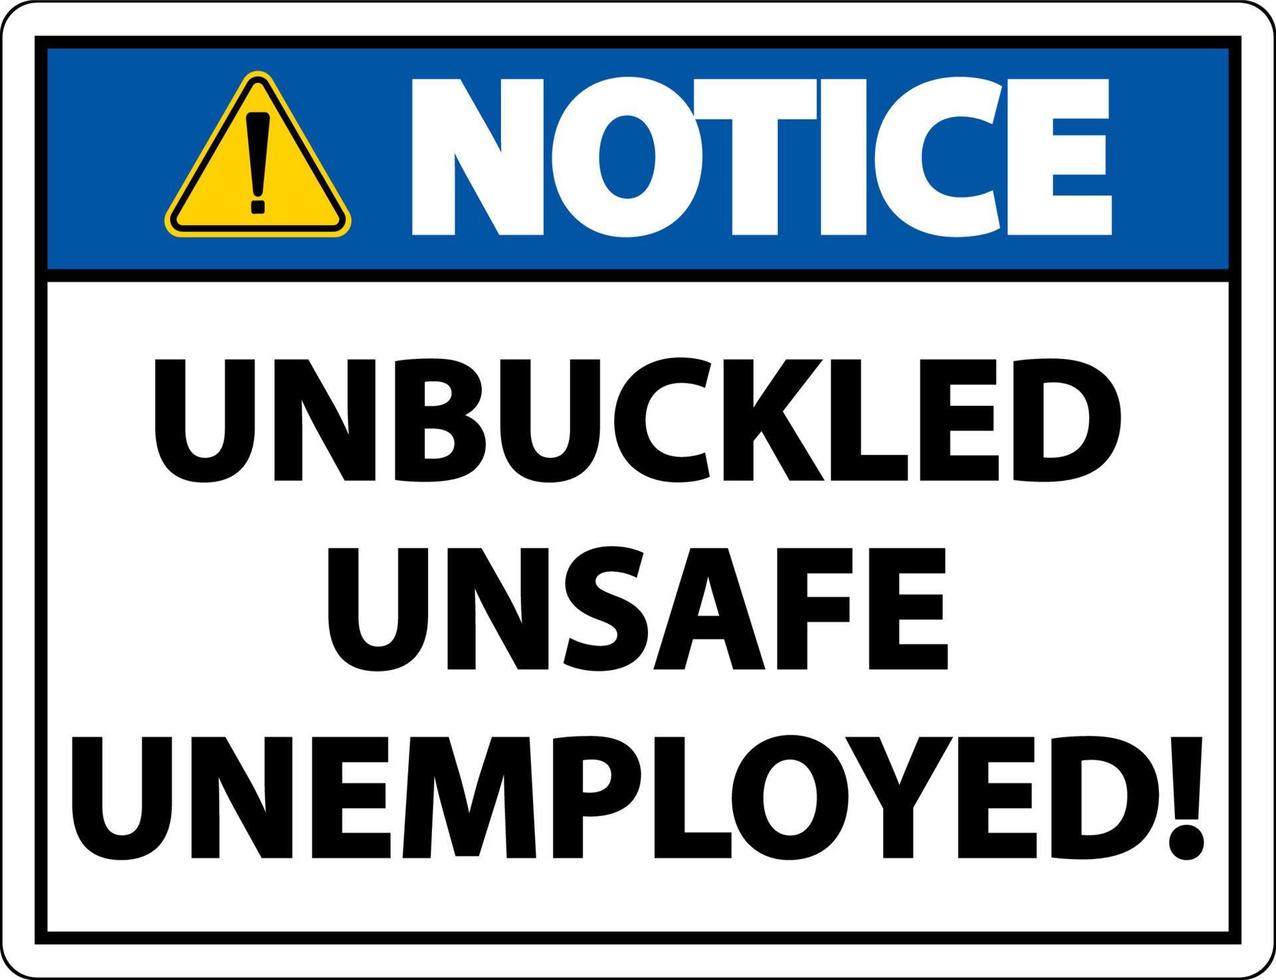 Notice Unbuckled Unsafe Unemployed Sign On White Background vector